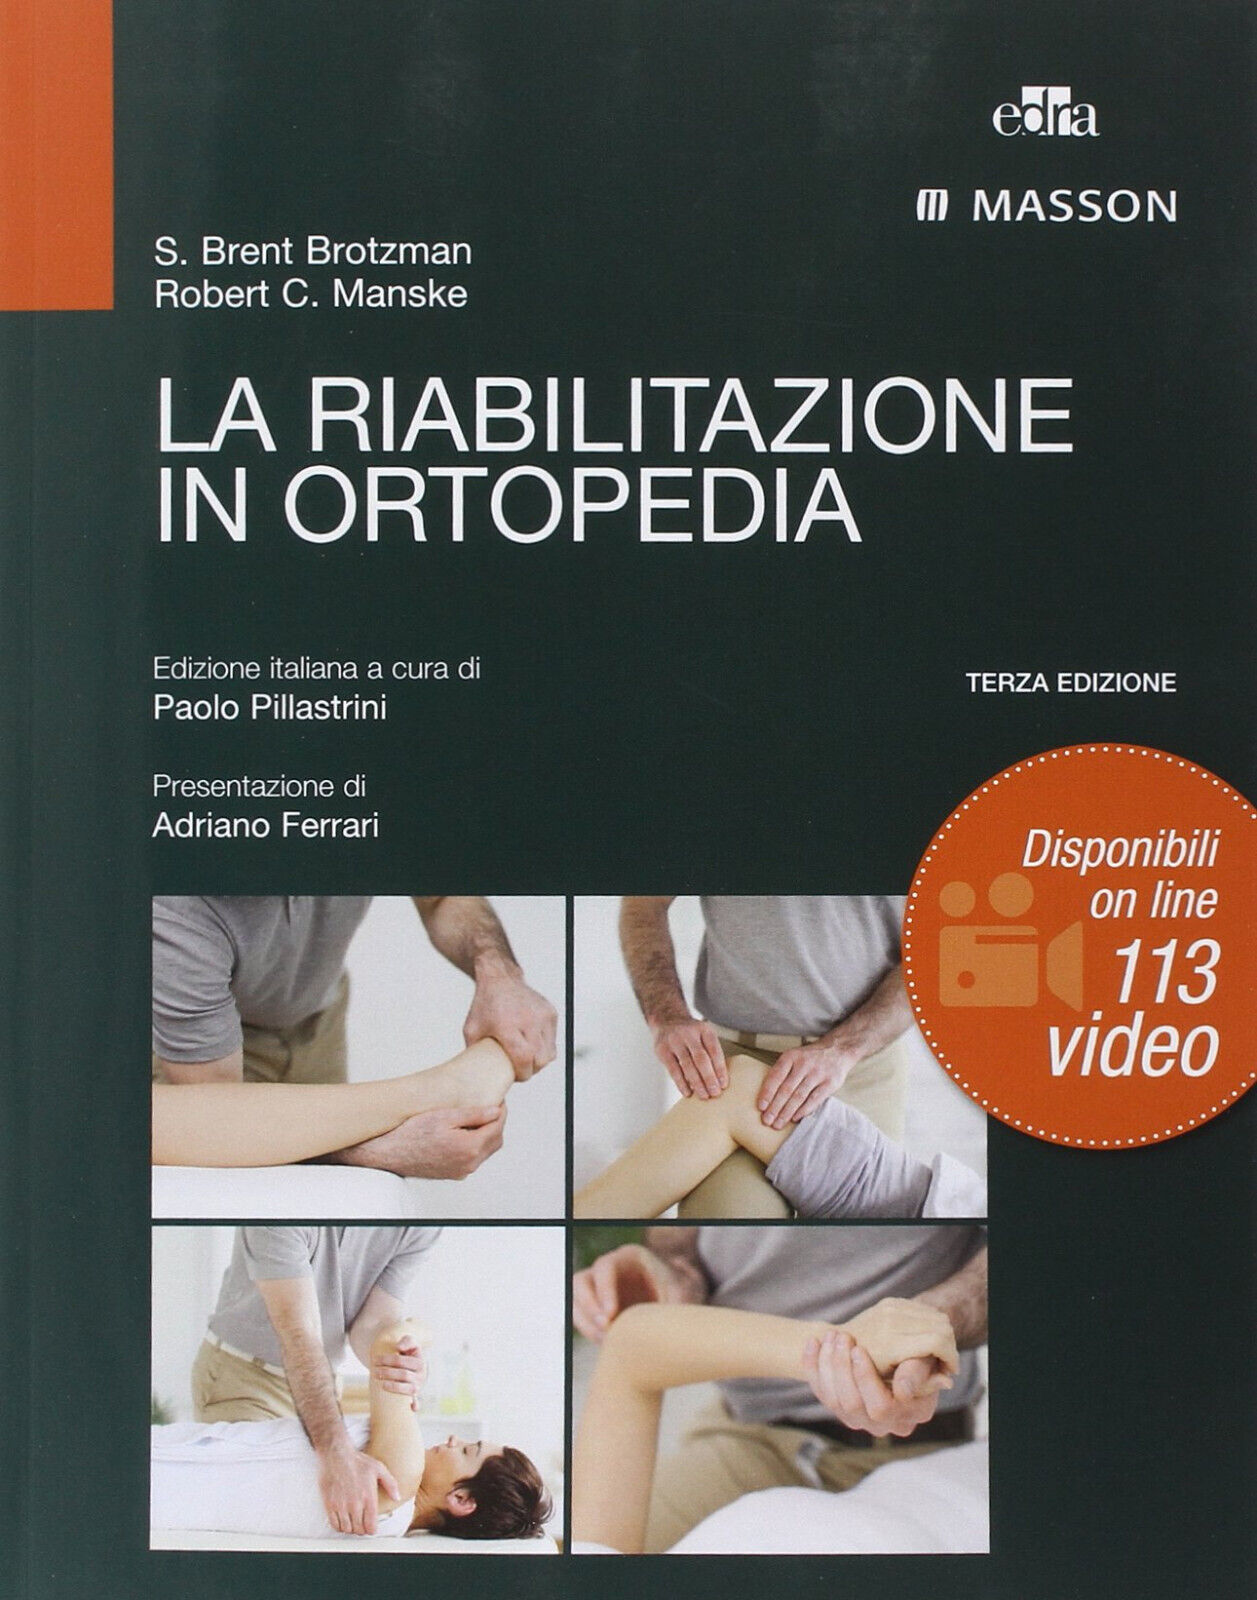 La riabilitazione in ortopedia - S. Brent Brotzman, Robert C. Manske - Edra,2014